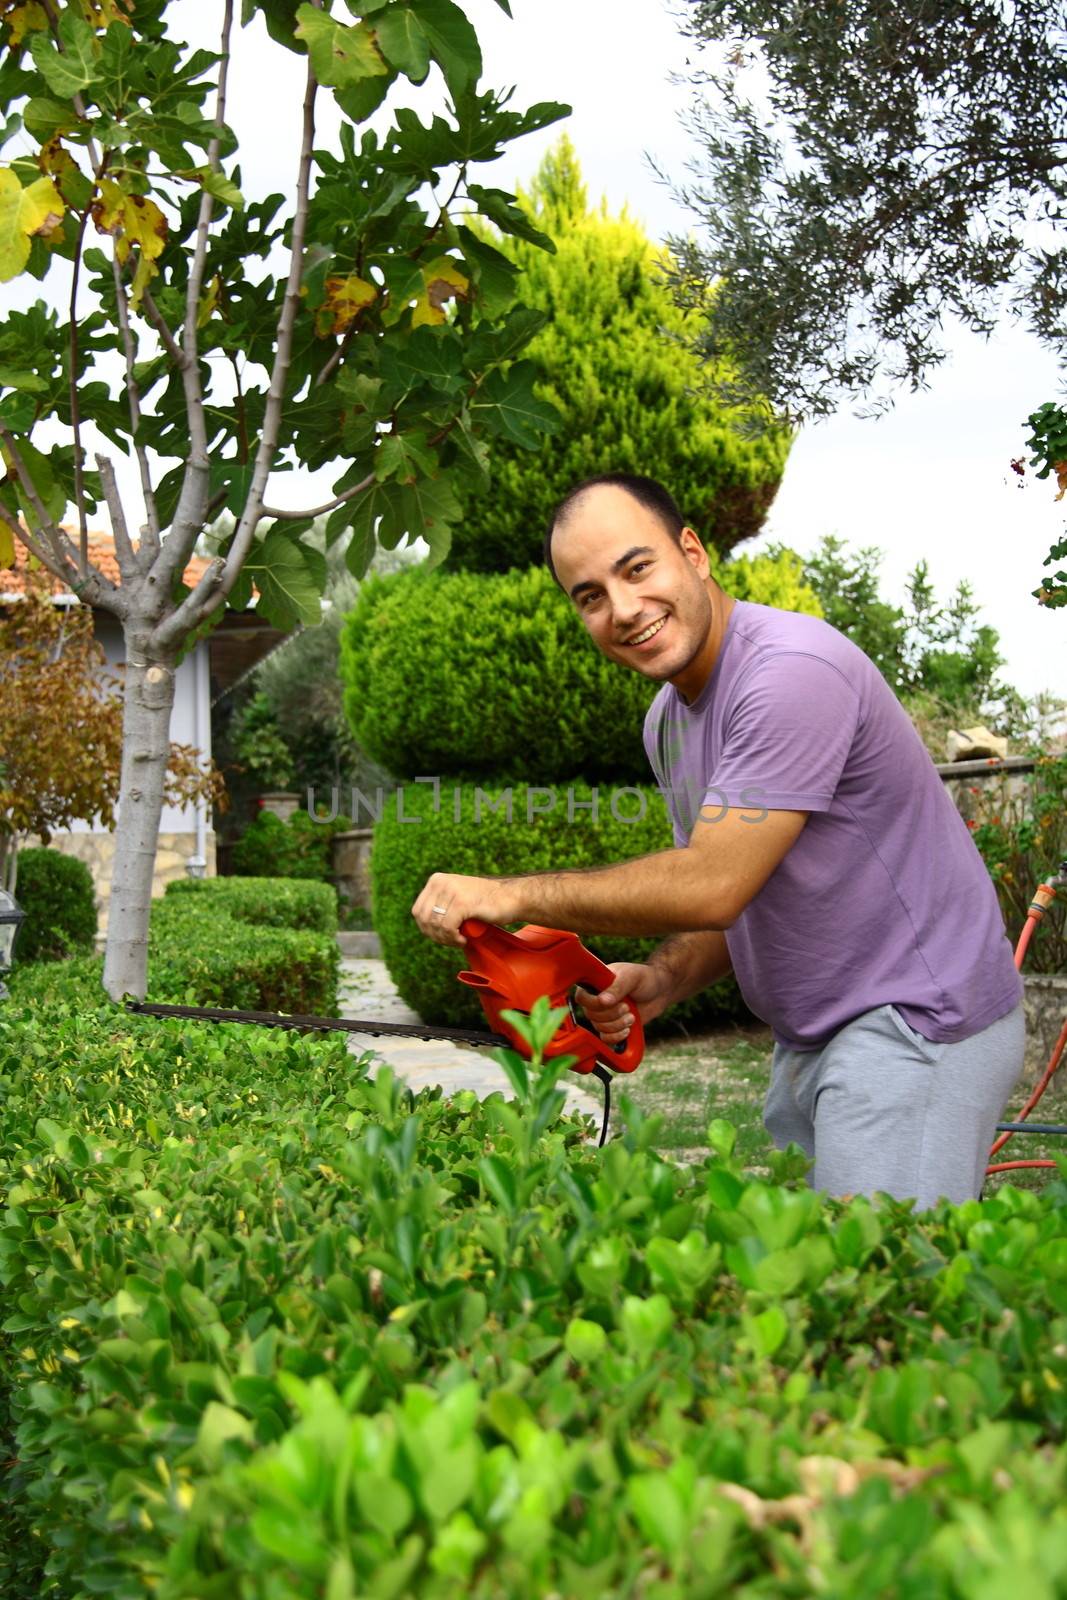 man pruning shrub in garden with electrical pruning tool